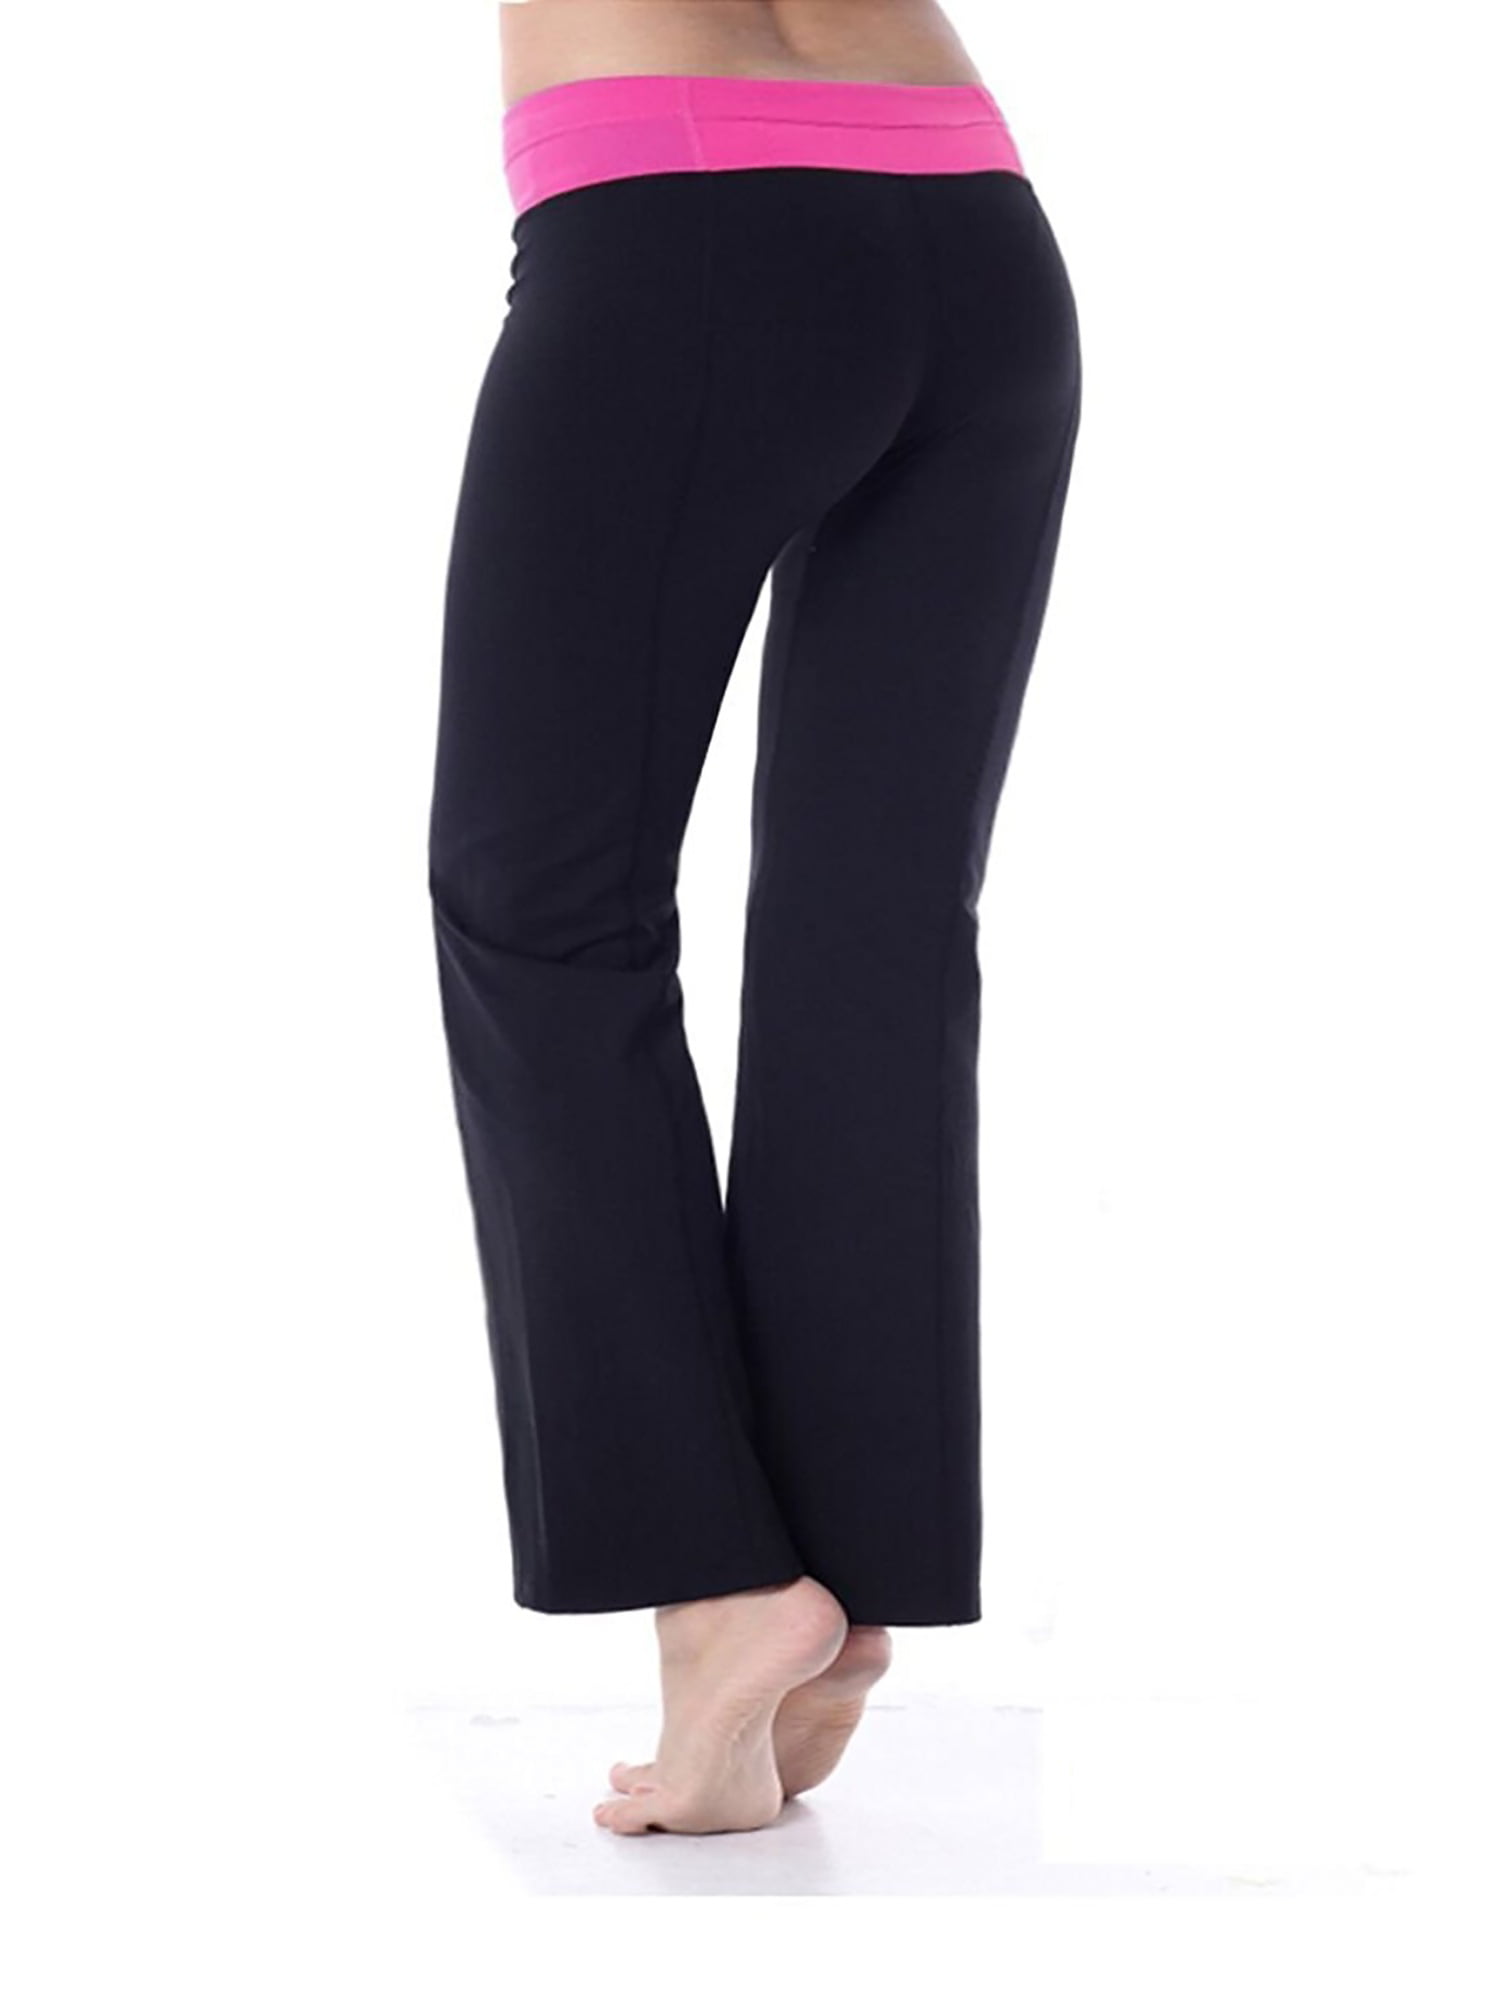 Bootcut Yoga Pants Cotton with Contrast Waistband - Walmart.com